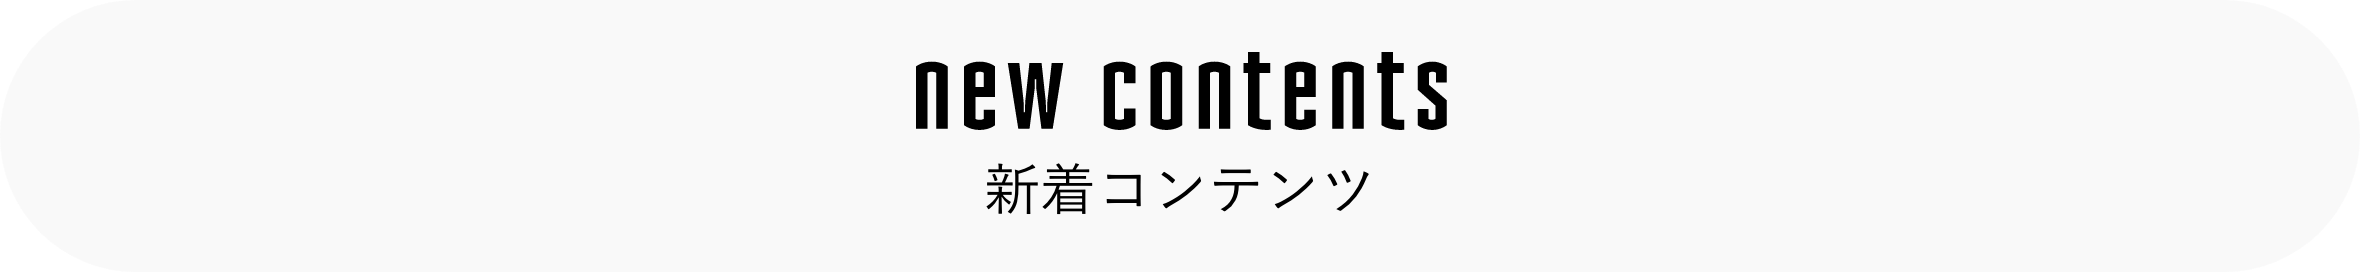 new contents 新着コンテンツ